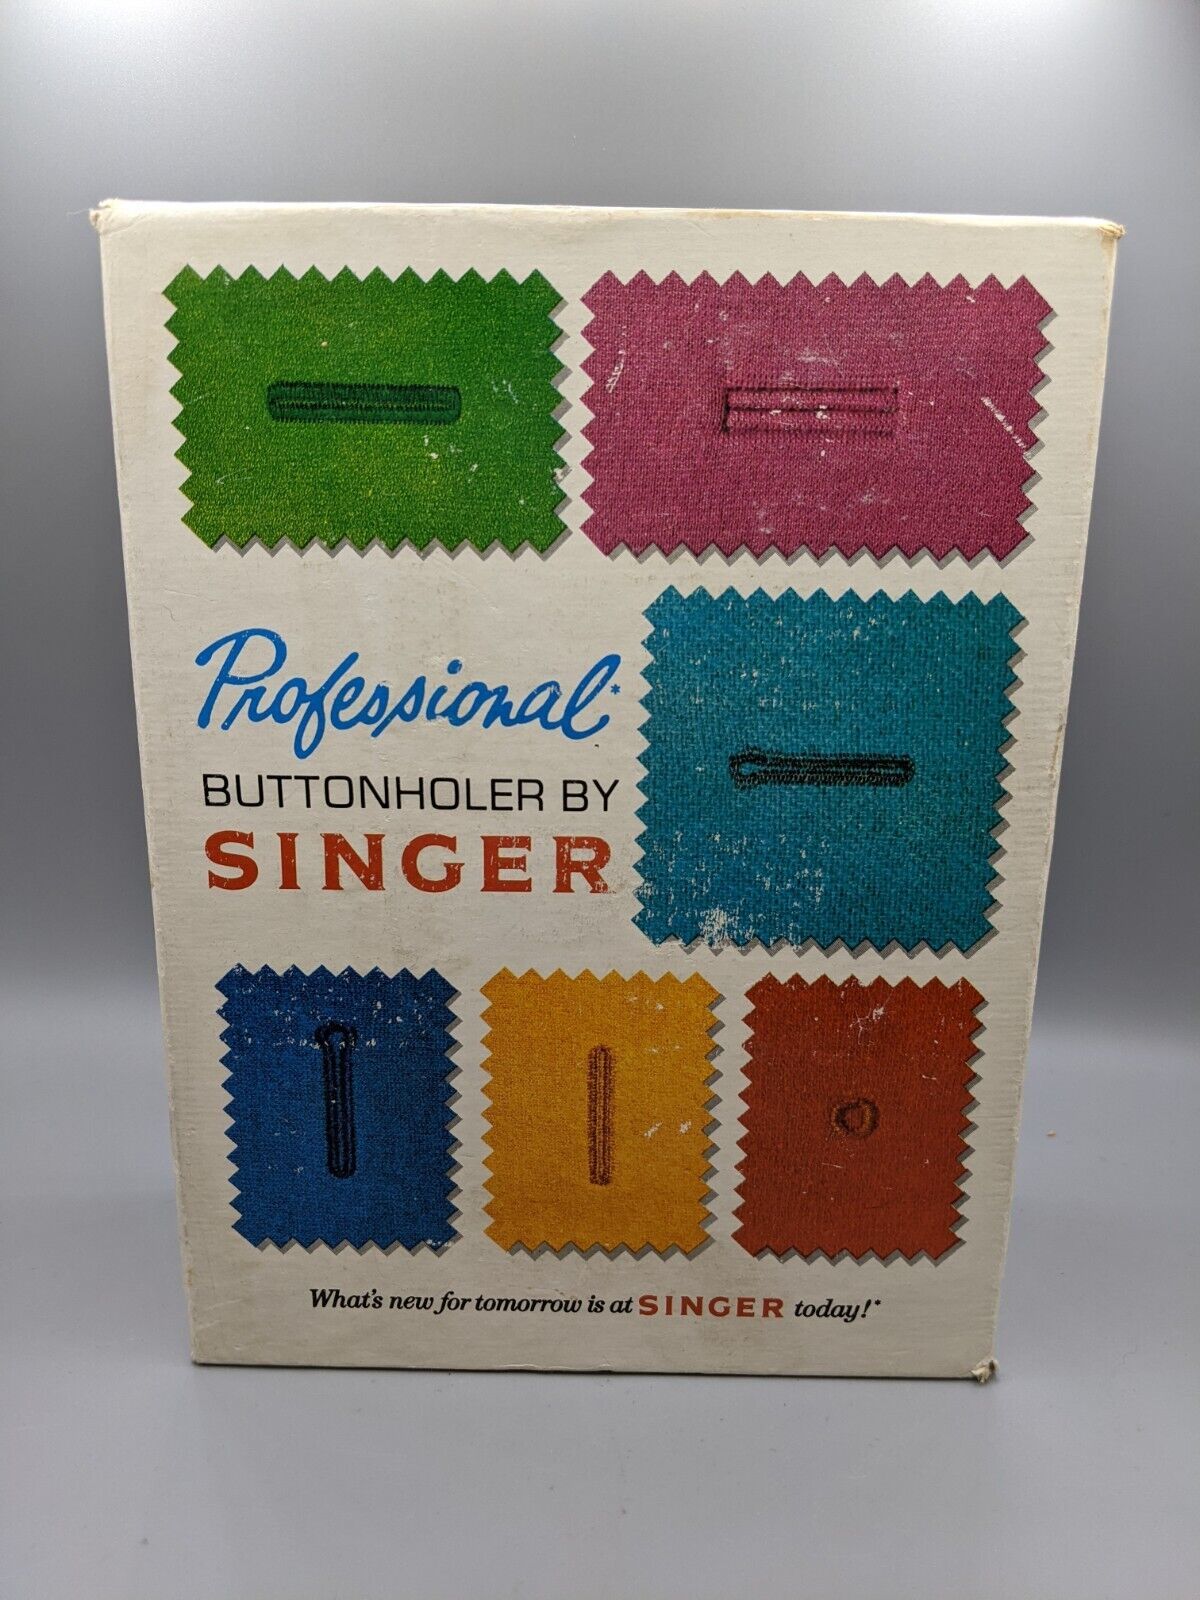 Vtg 1973 Singer Professional Buttonholer Model #38116 Original Box Instructions - $28.04